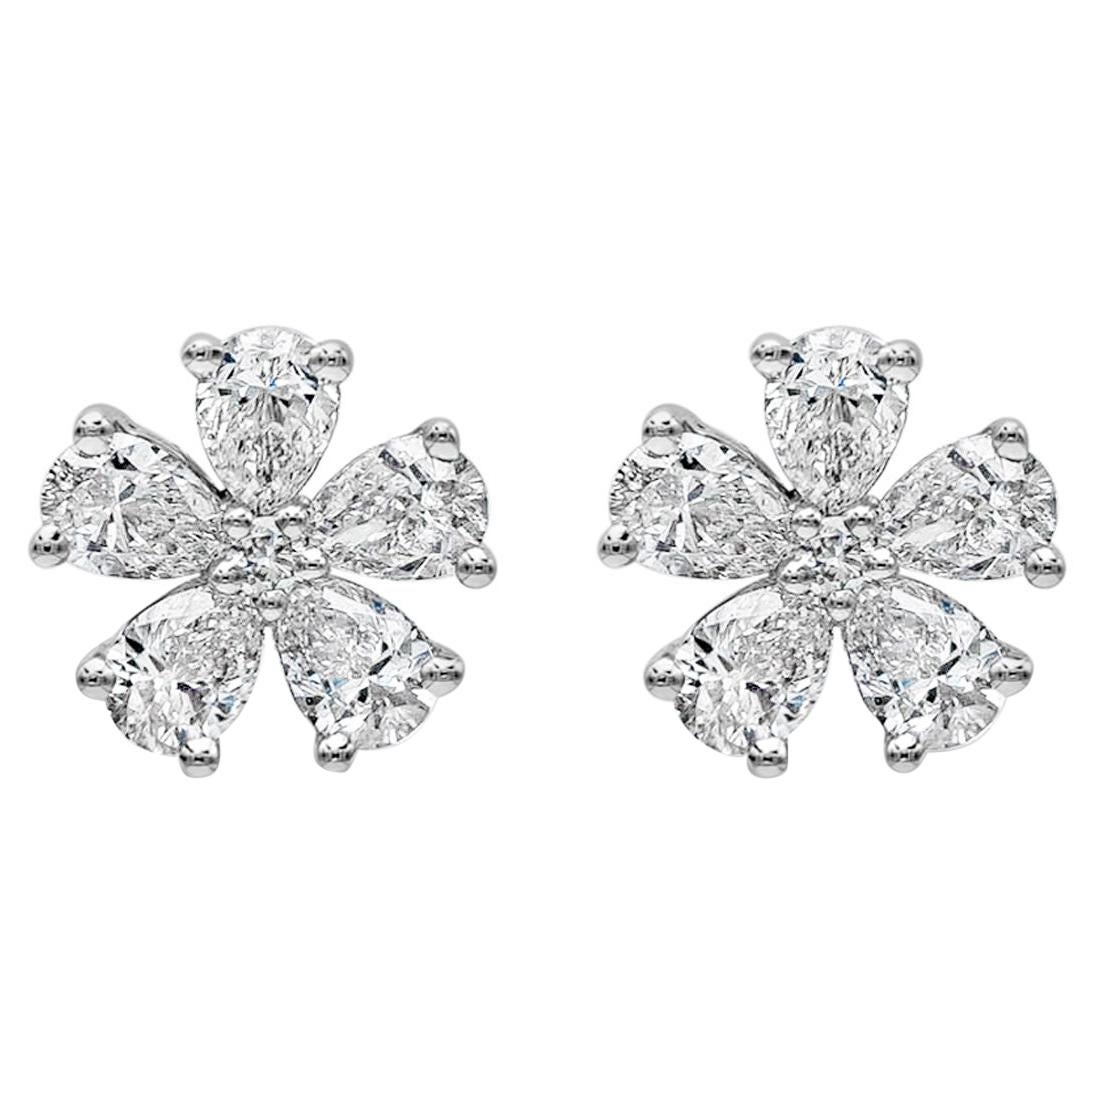 Roman Malakov 1.49 Carats Total Pear Shape Diamond Flower Cluster Stud Earrings For Sale